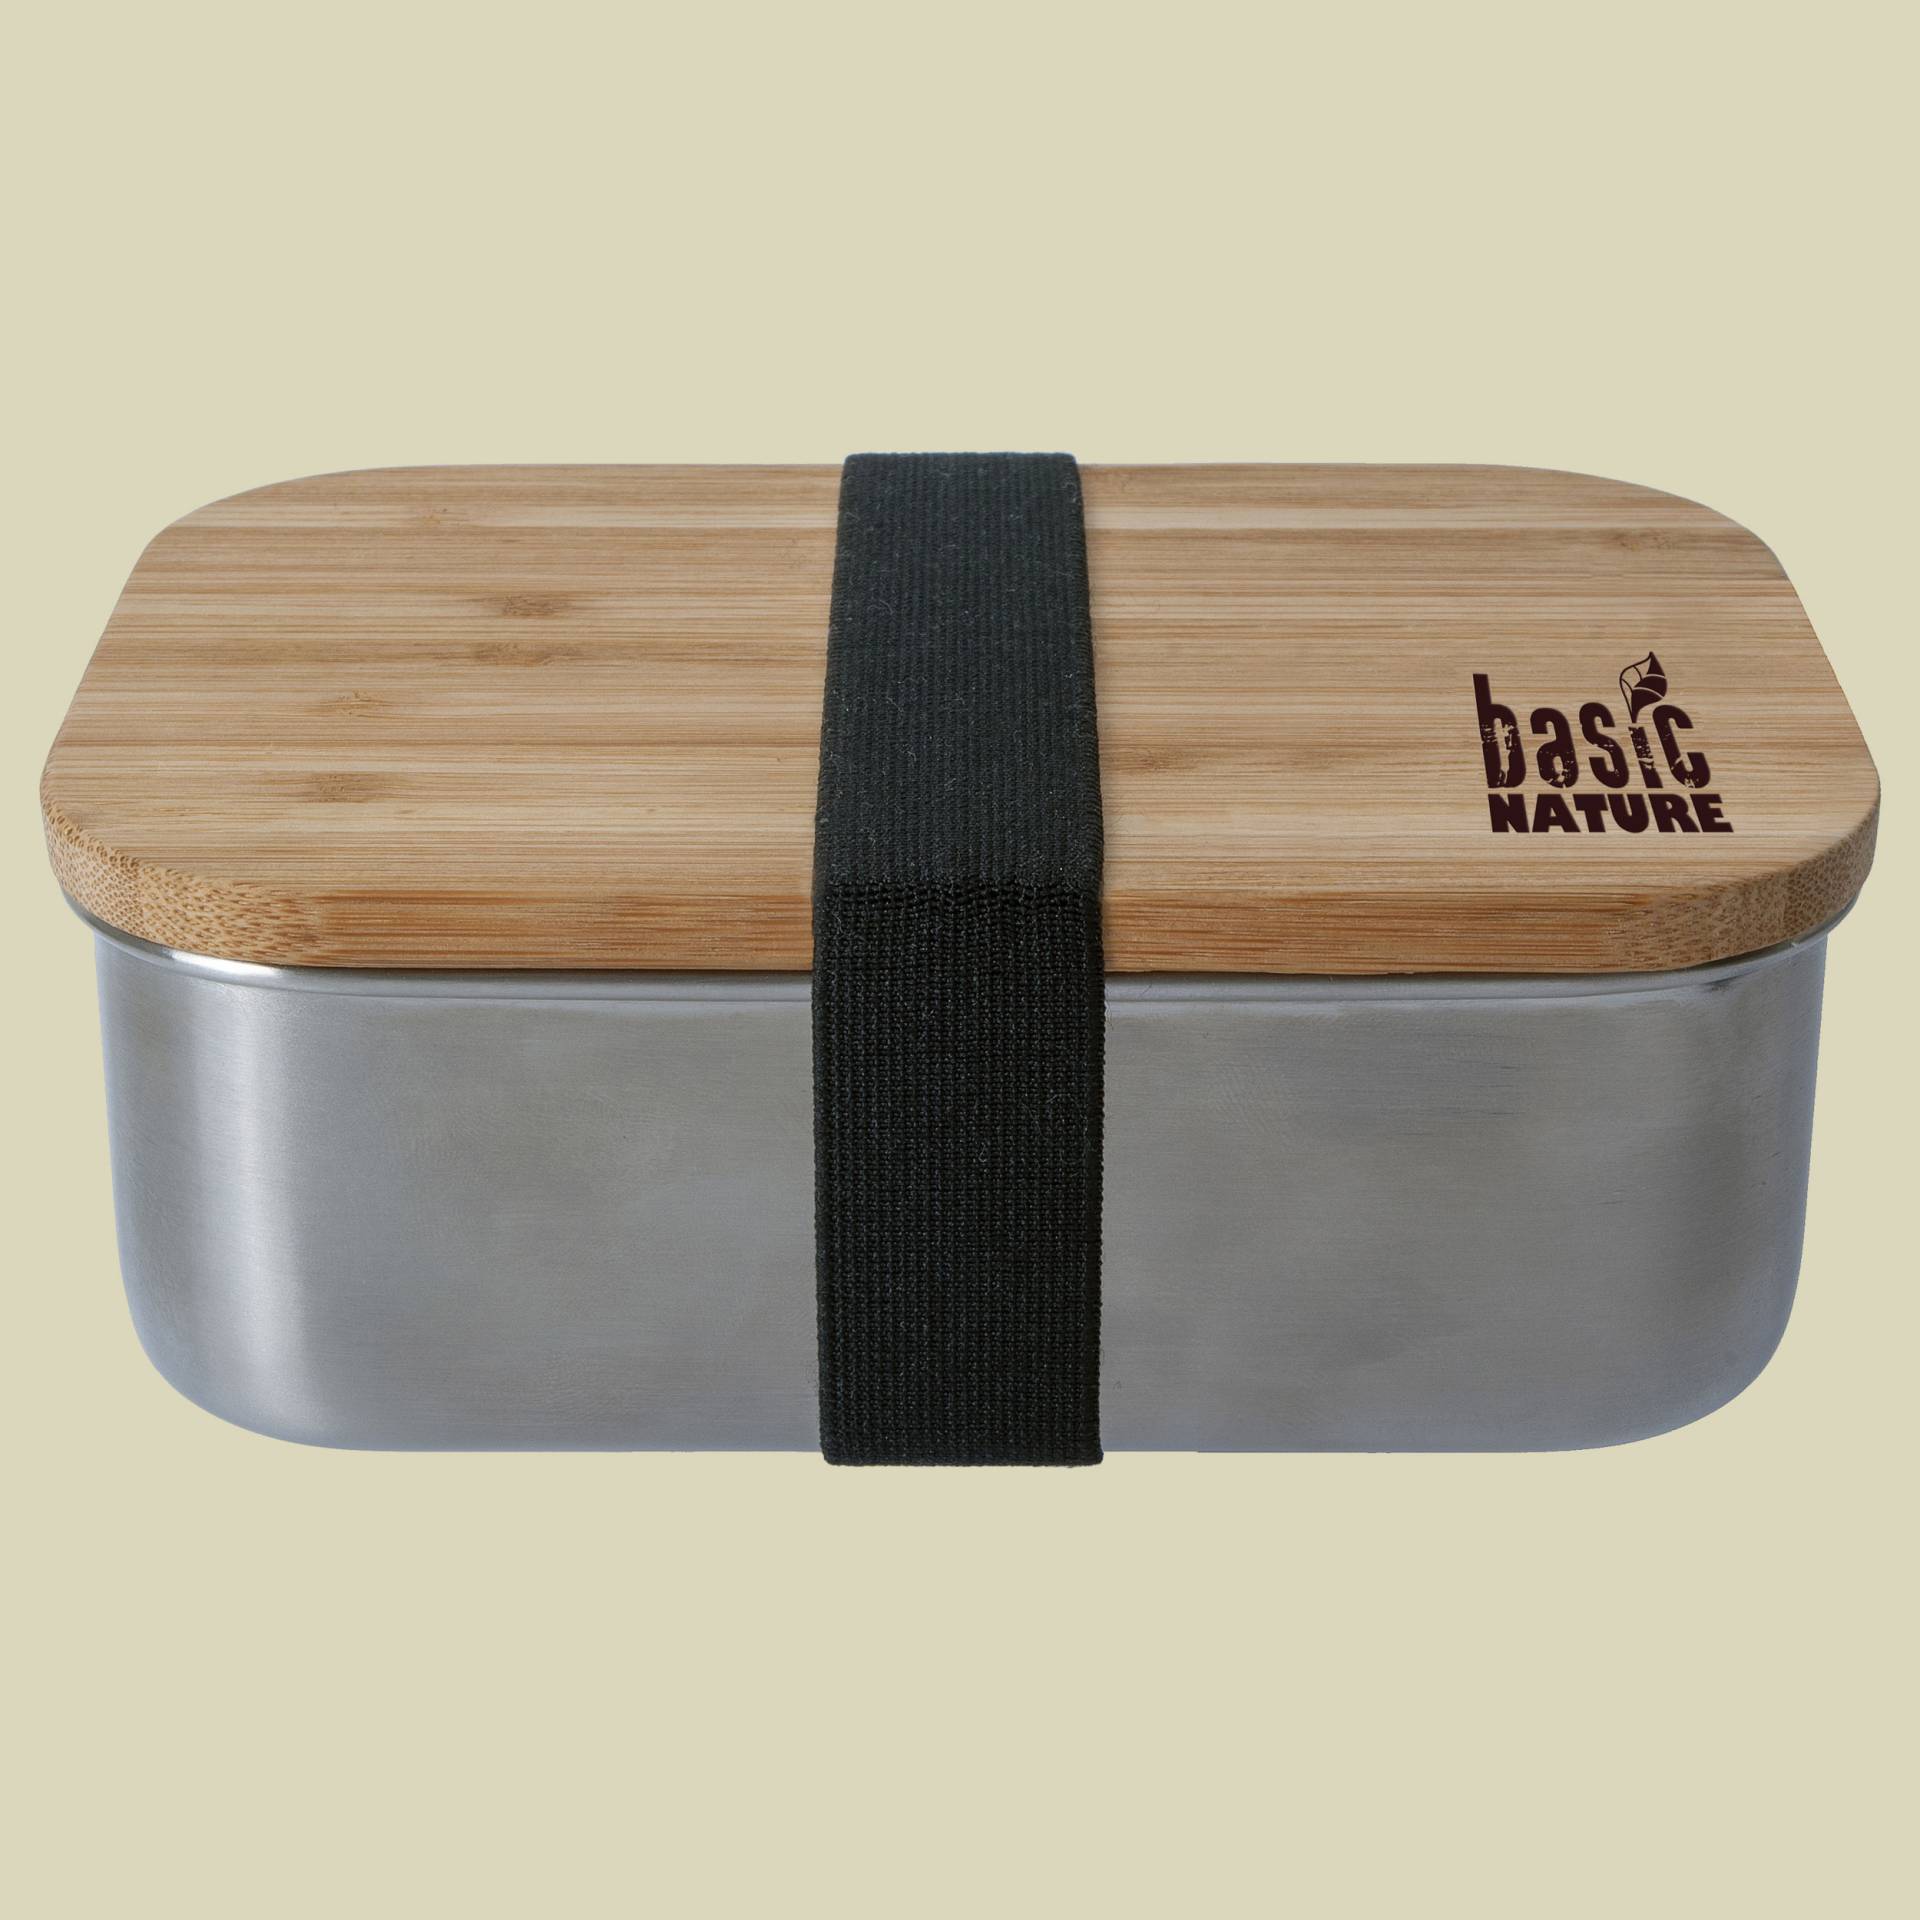 BasicNature Lunchbox Bamboo Volumen 0,8 L Farbe edelstahl von Basic Nature